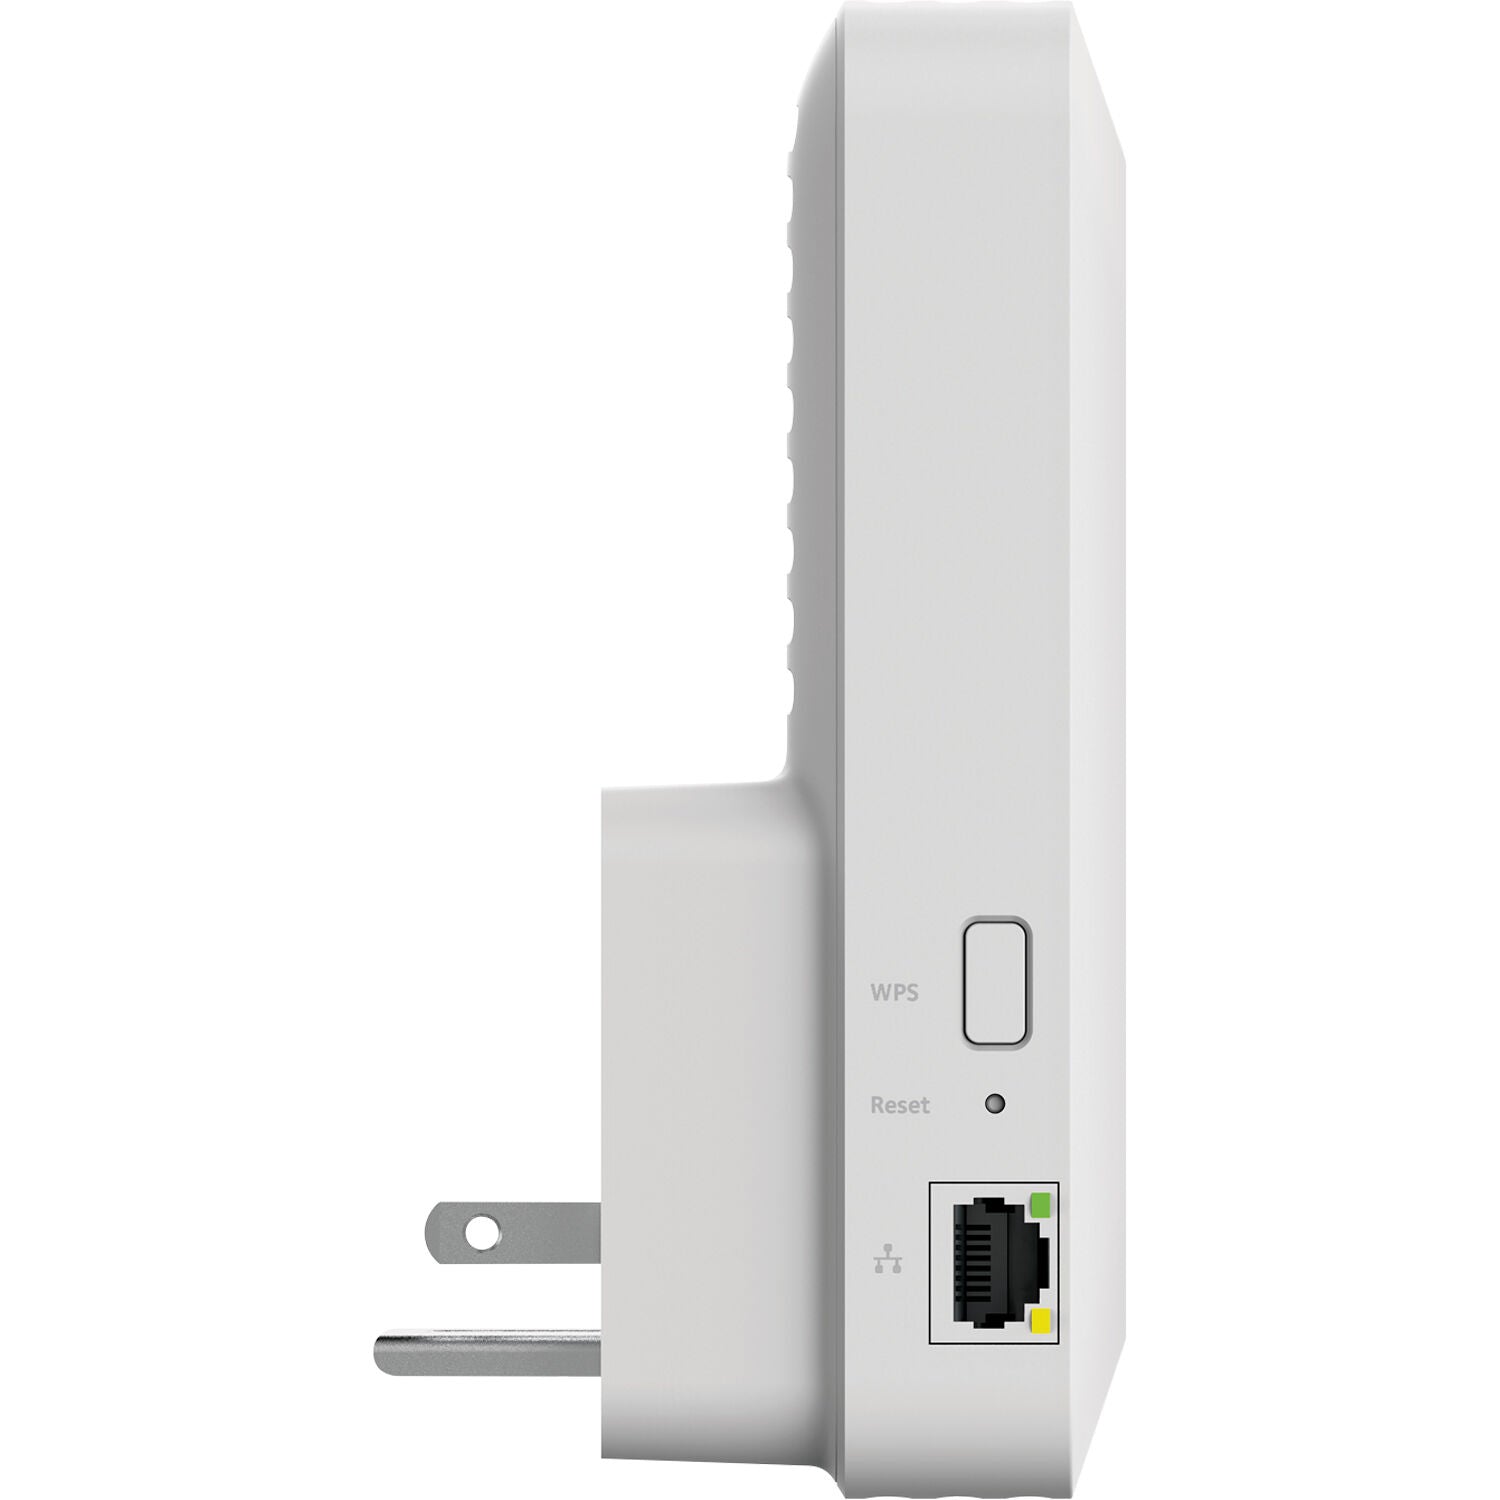 NETGEAR EAX15-100NAR AX1800 Dual-band WiFi 6 Mesh Extender Wall Plug, White - Certified Refurbished